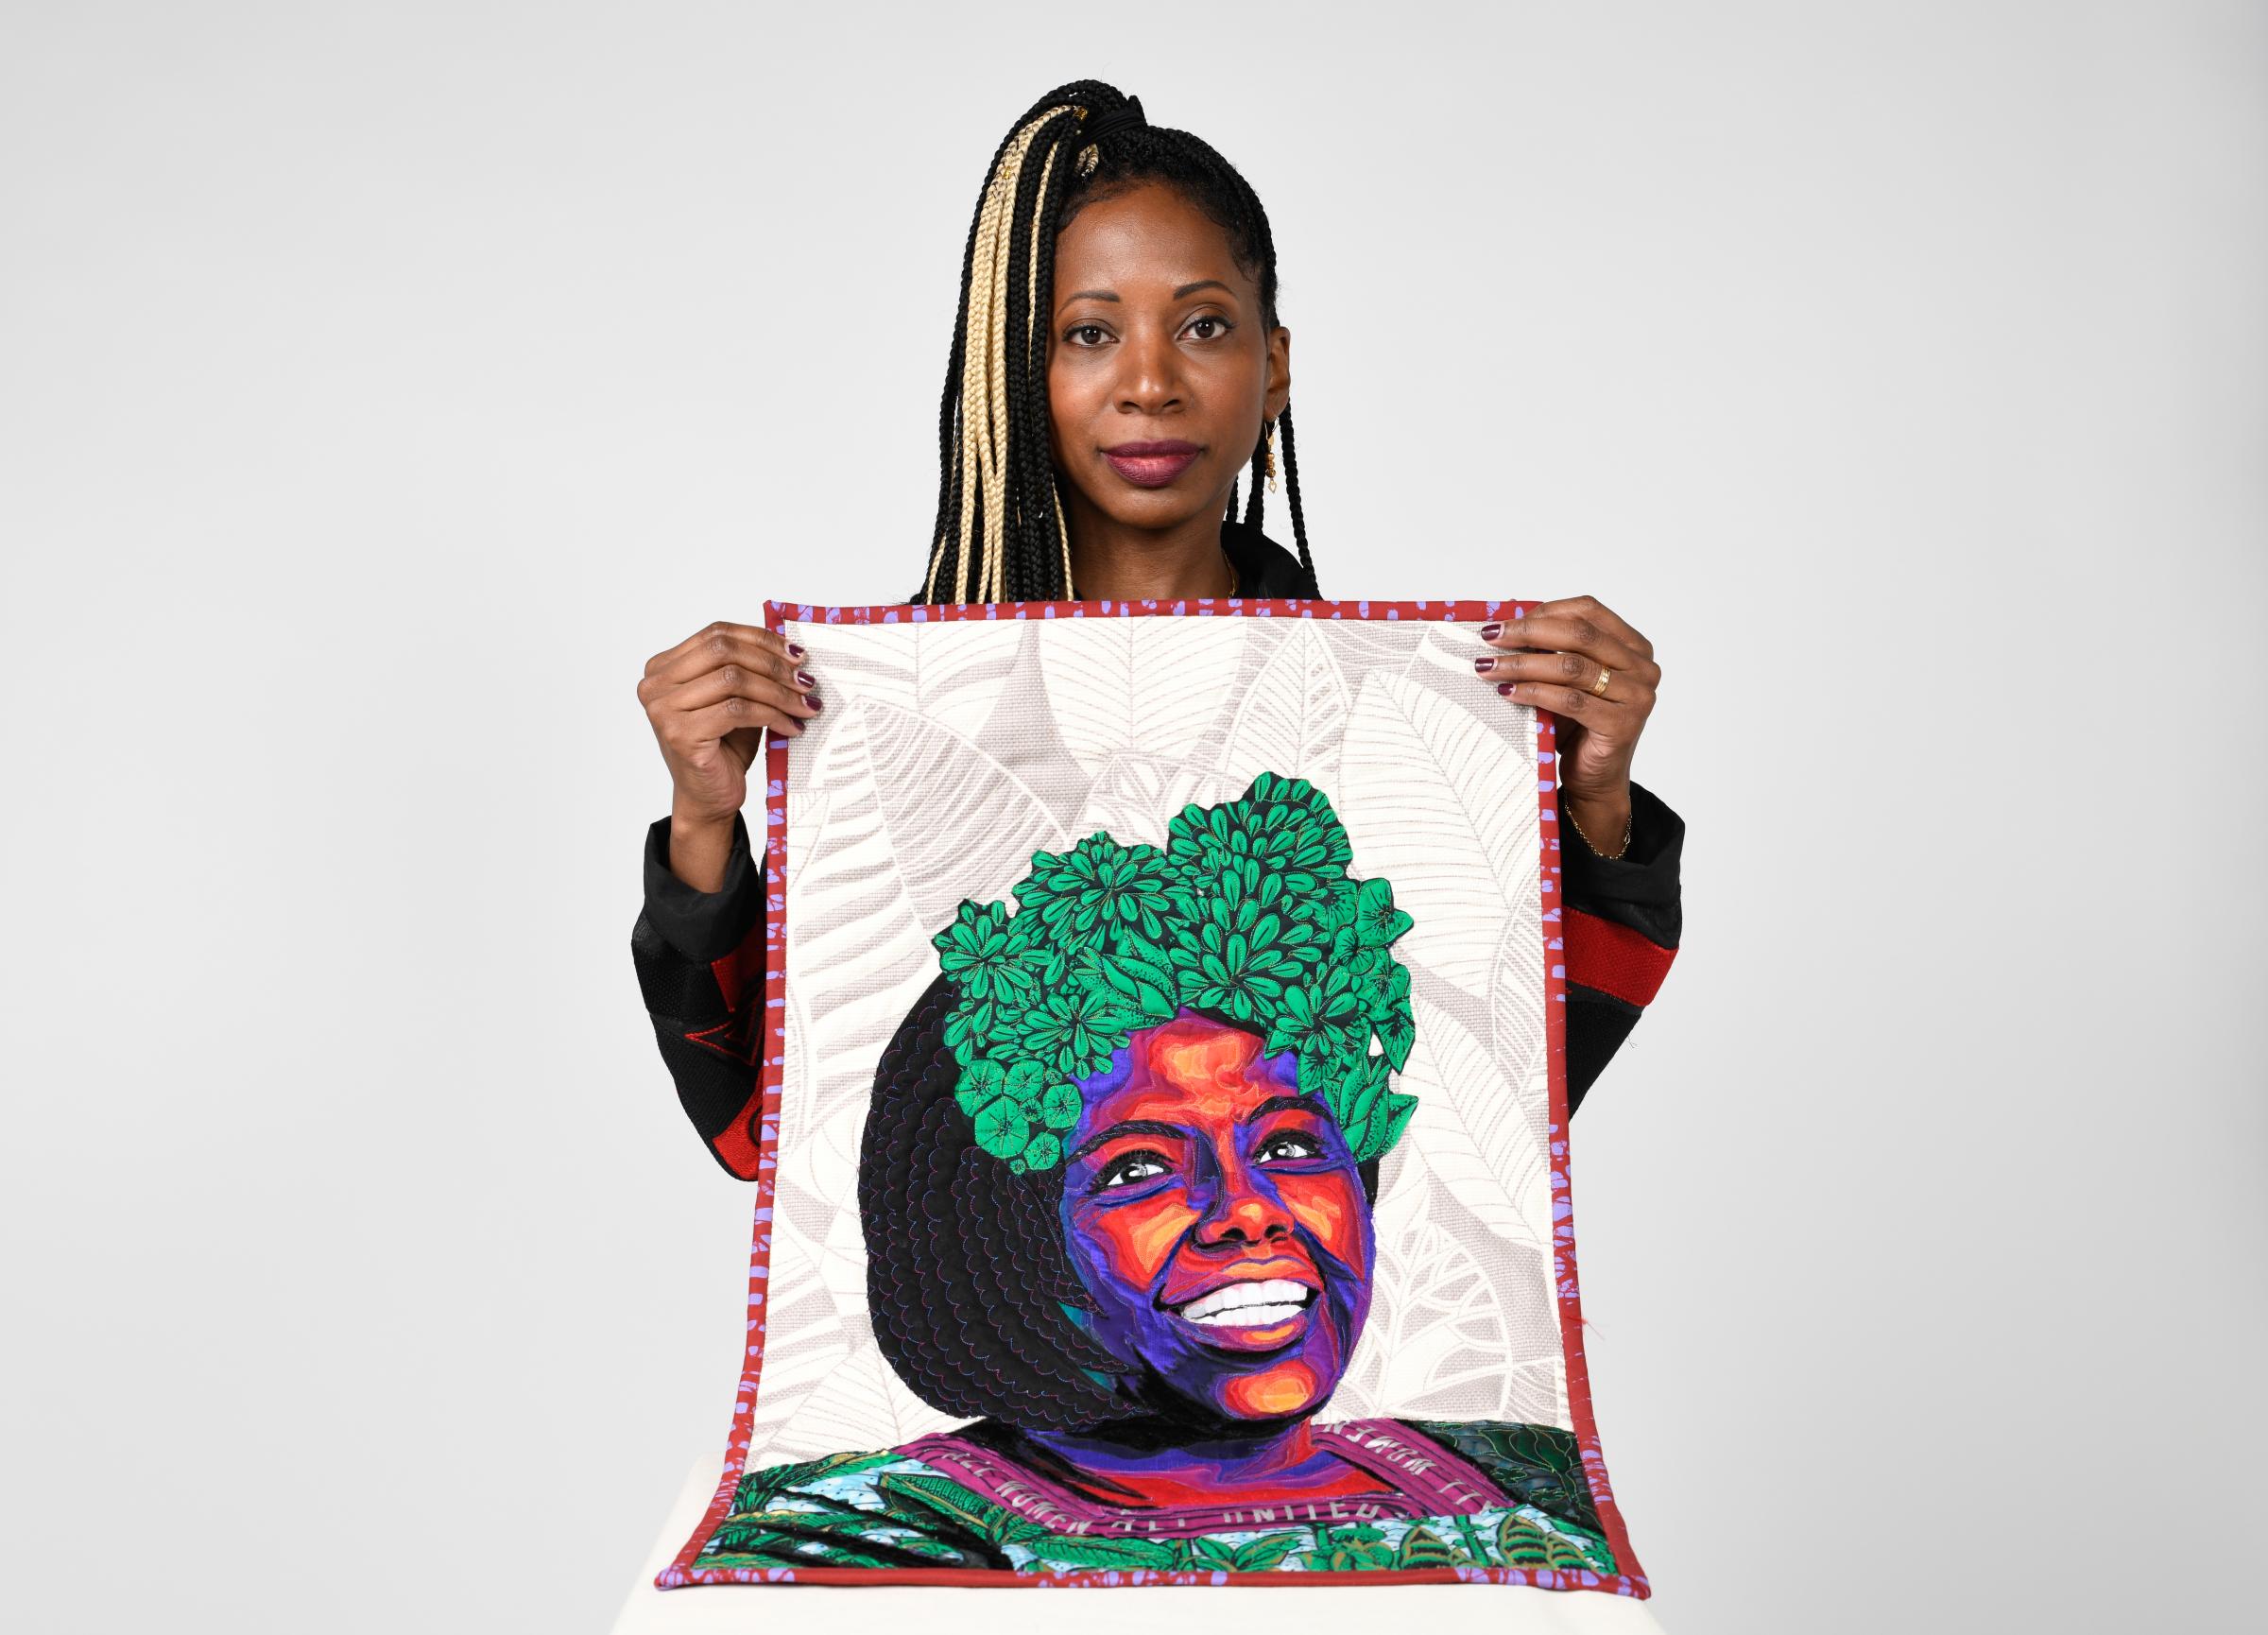 Artist Bisa Butler with her artwork on Feb. 24, 2020 at TIME studios.